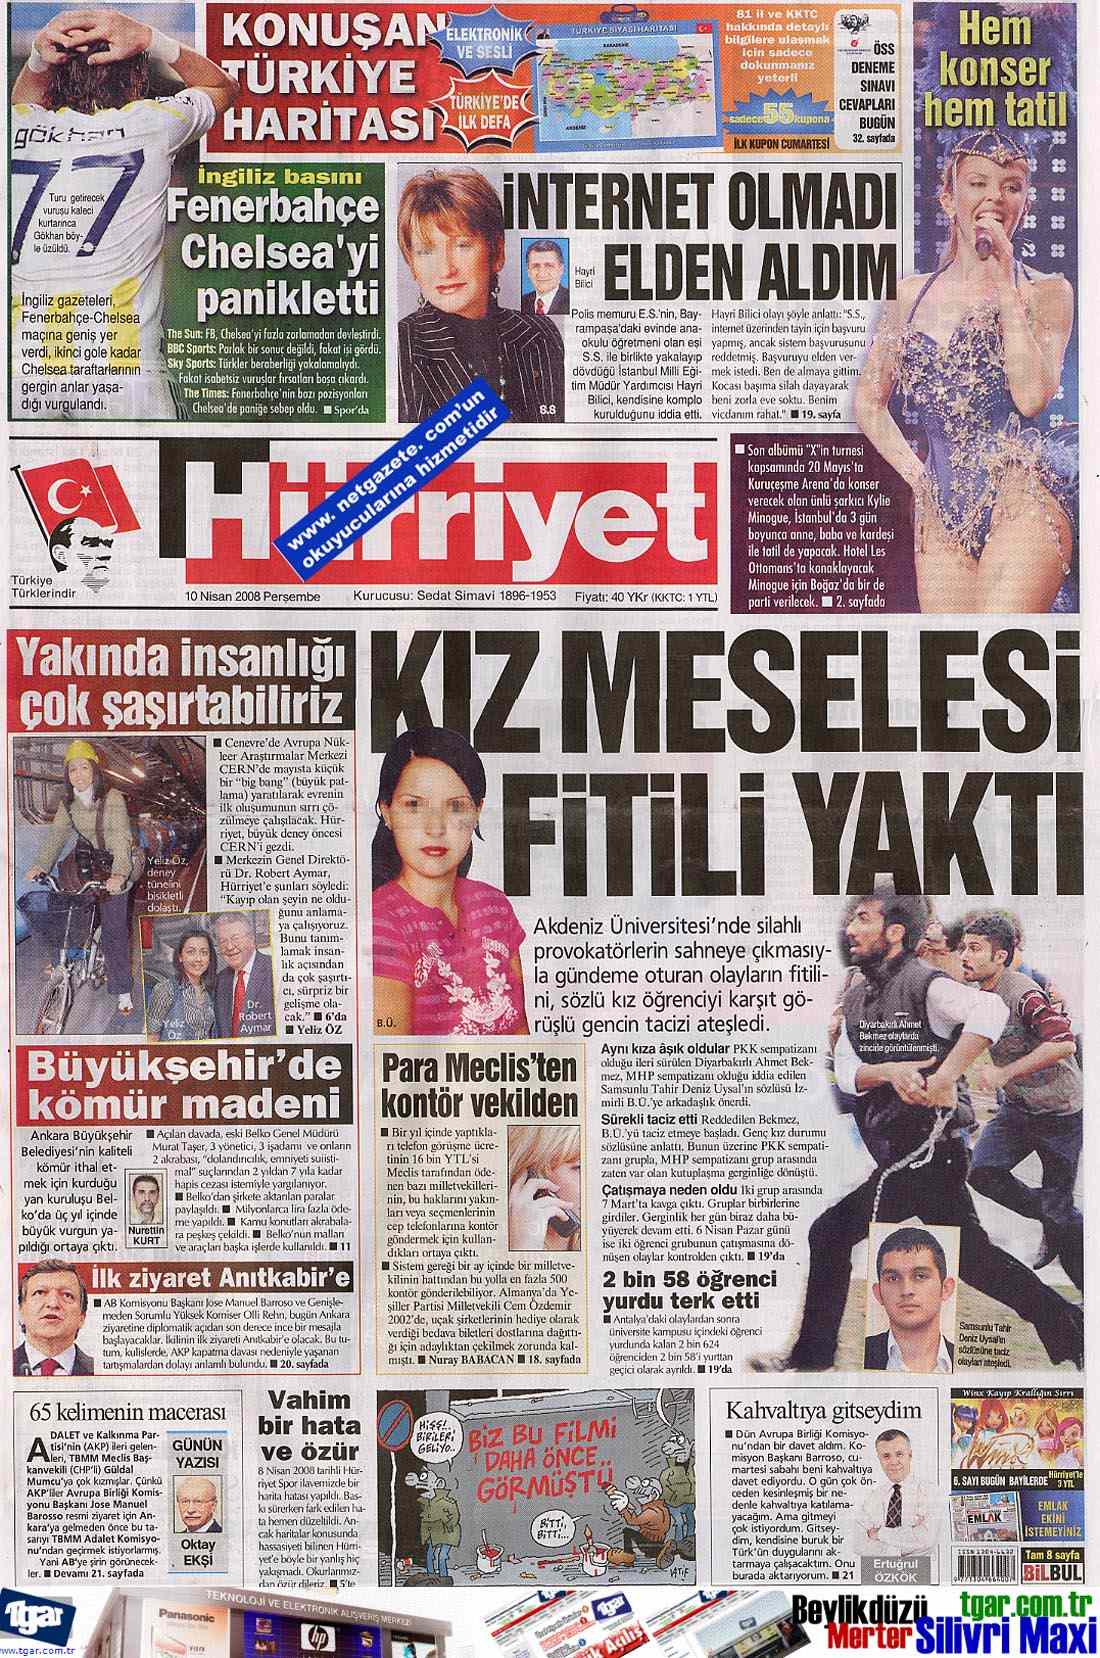 http://www.iyibilgi.com/images/haber/22492.jpg